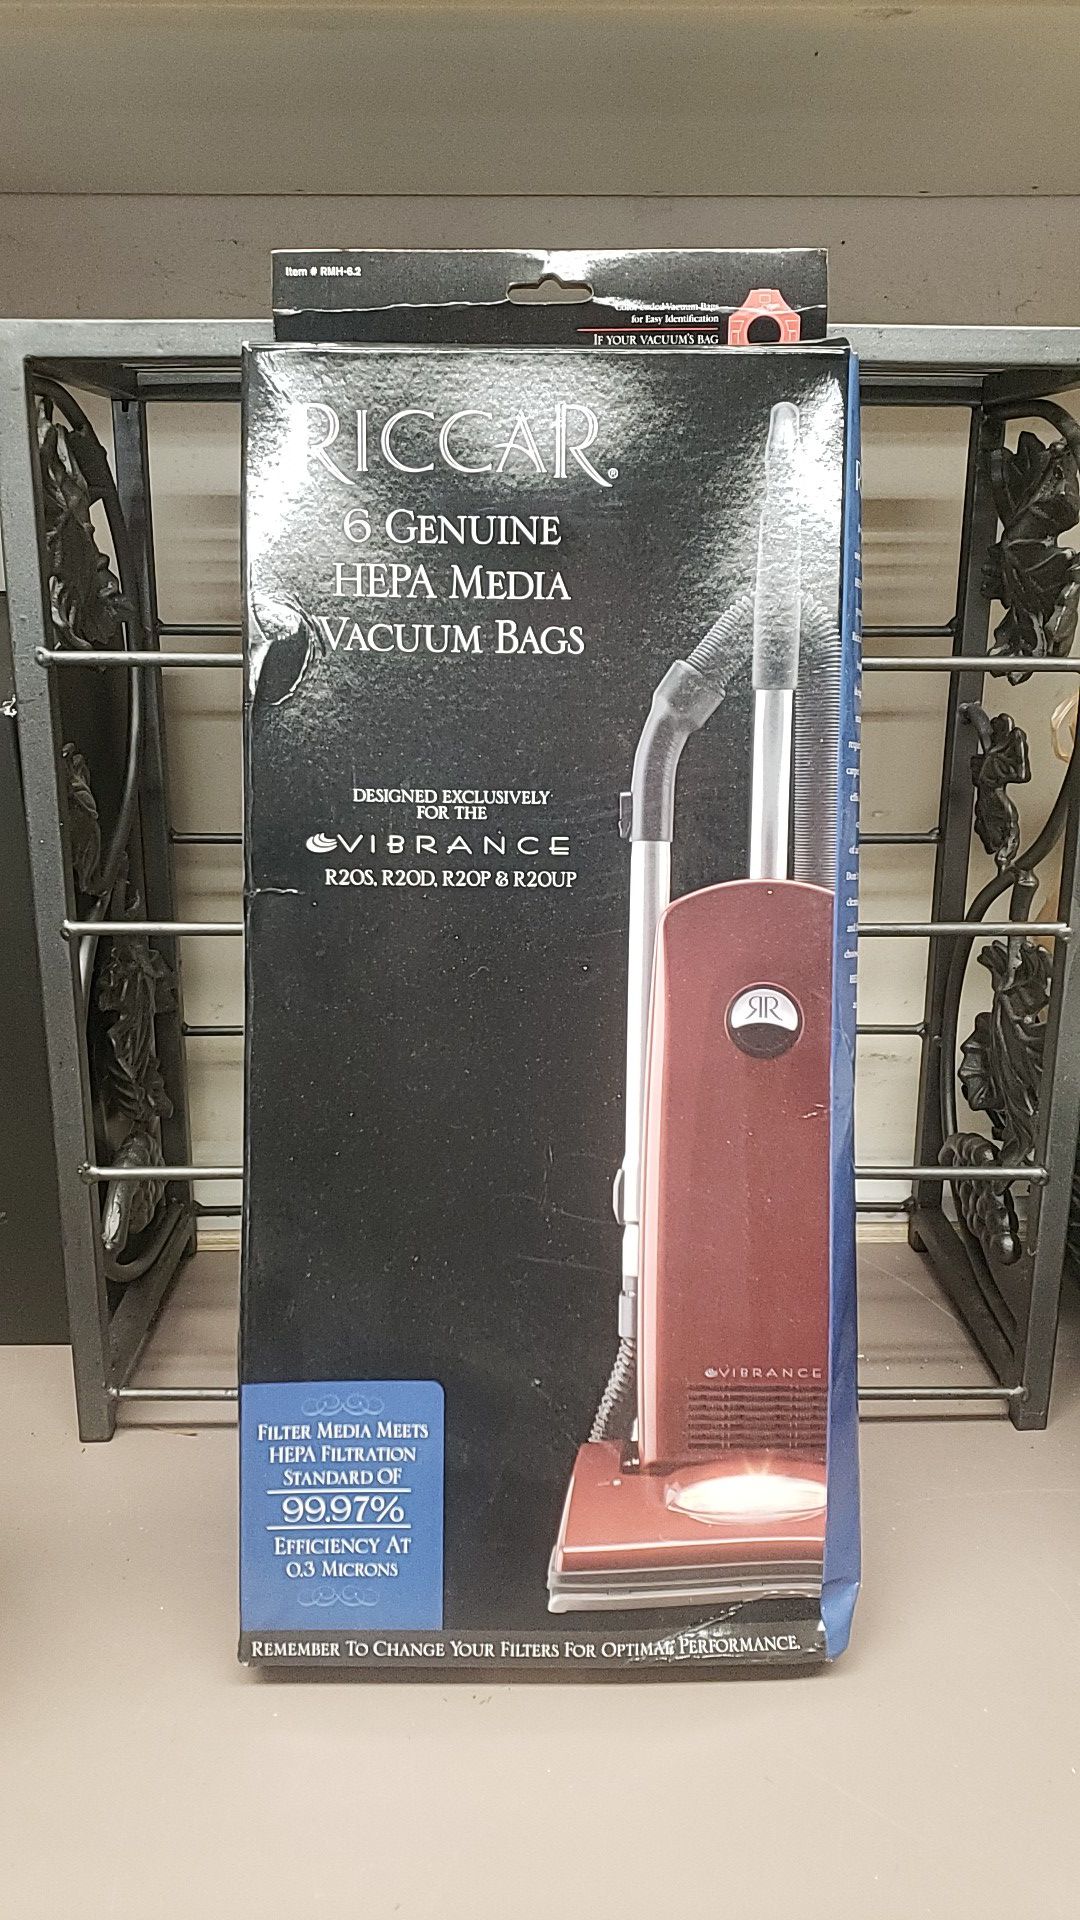 NIB Riccar 6 Genuine Hepa Media Vacuum Bags